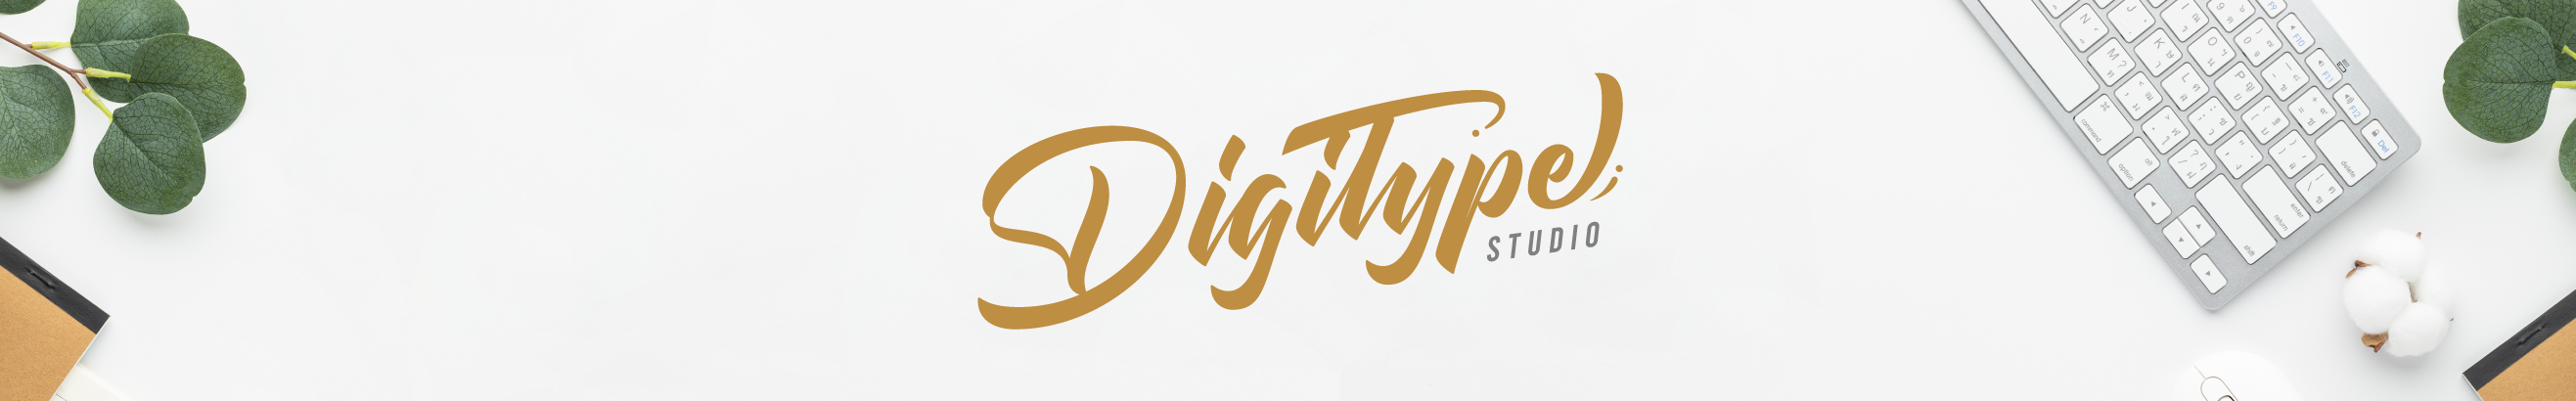 Digitype Studio's profile banner